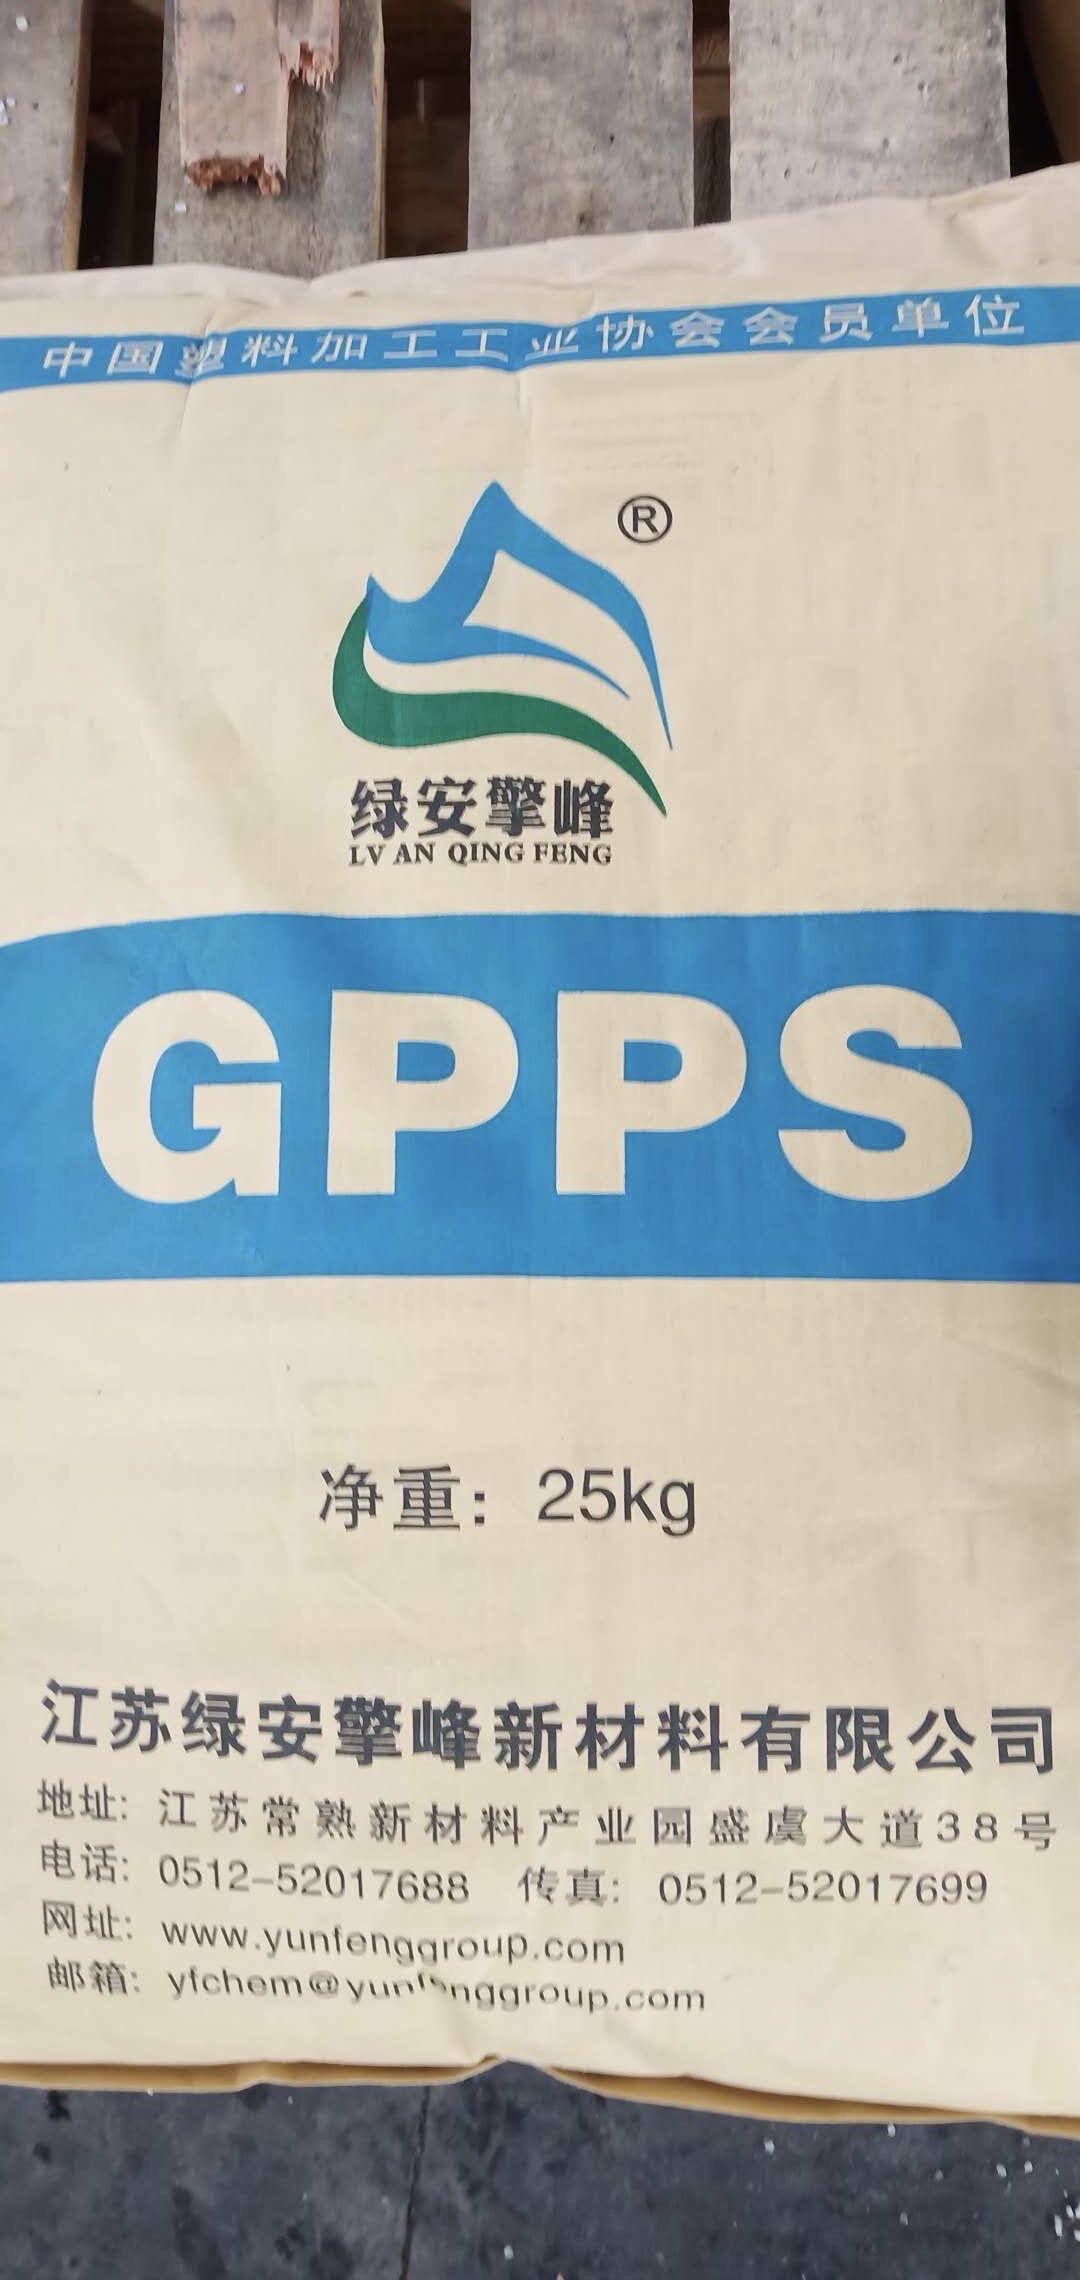 GPPS 绿安擎峰 GP-525 透明级   20209A-4